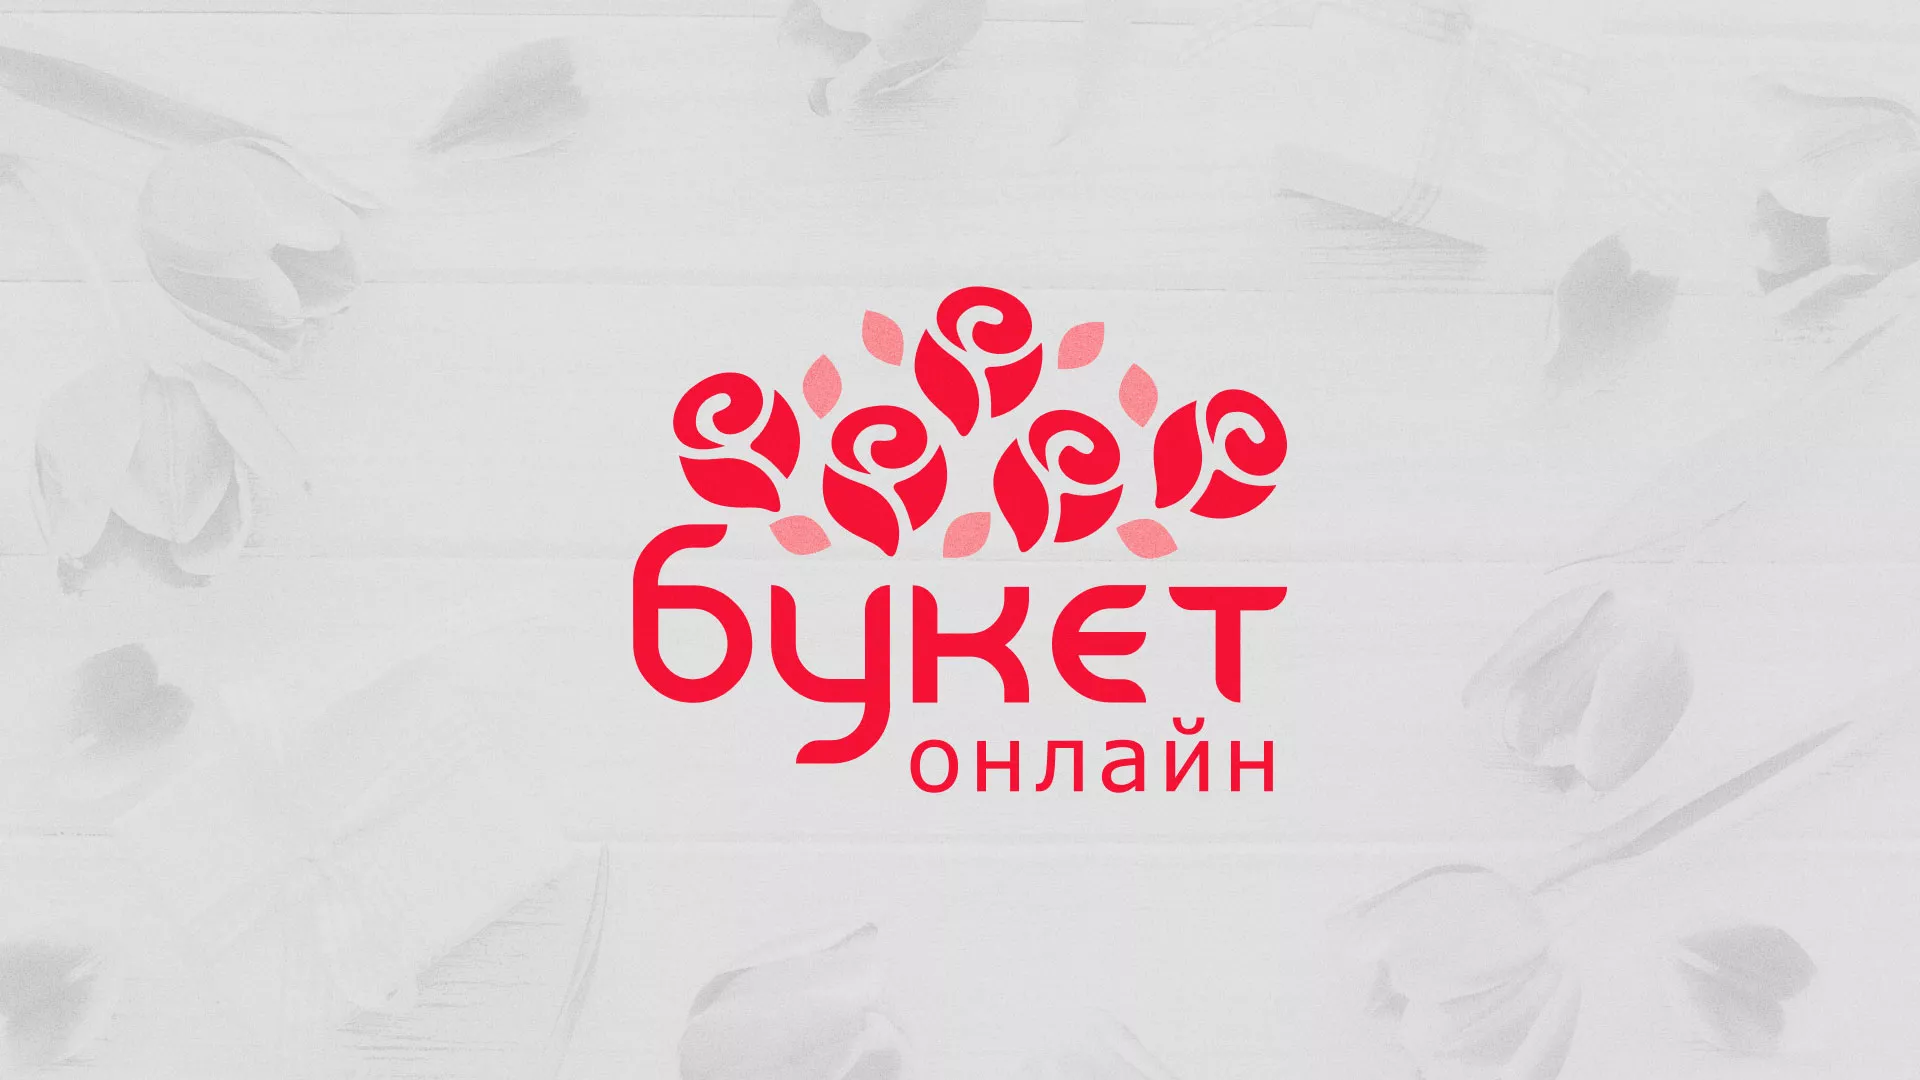 Создание интернет-магазина «Букет-онлайн» по цветам в Рязани